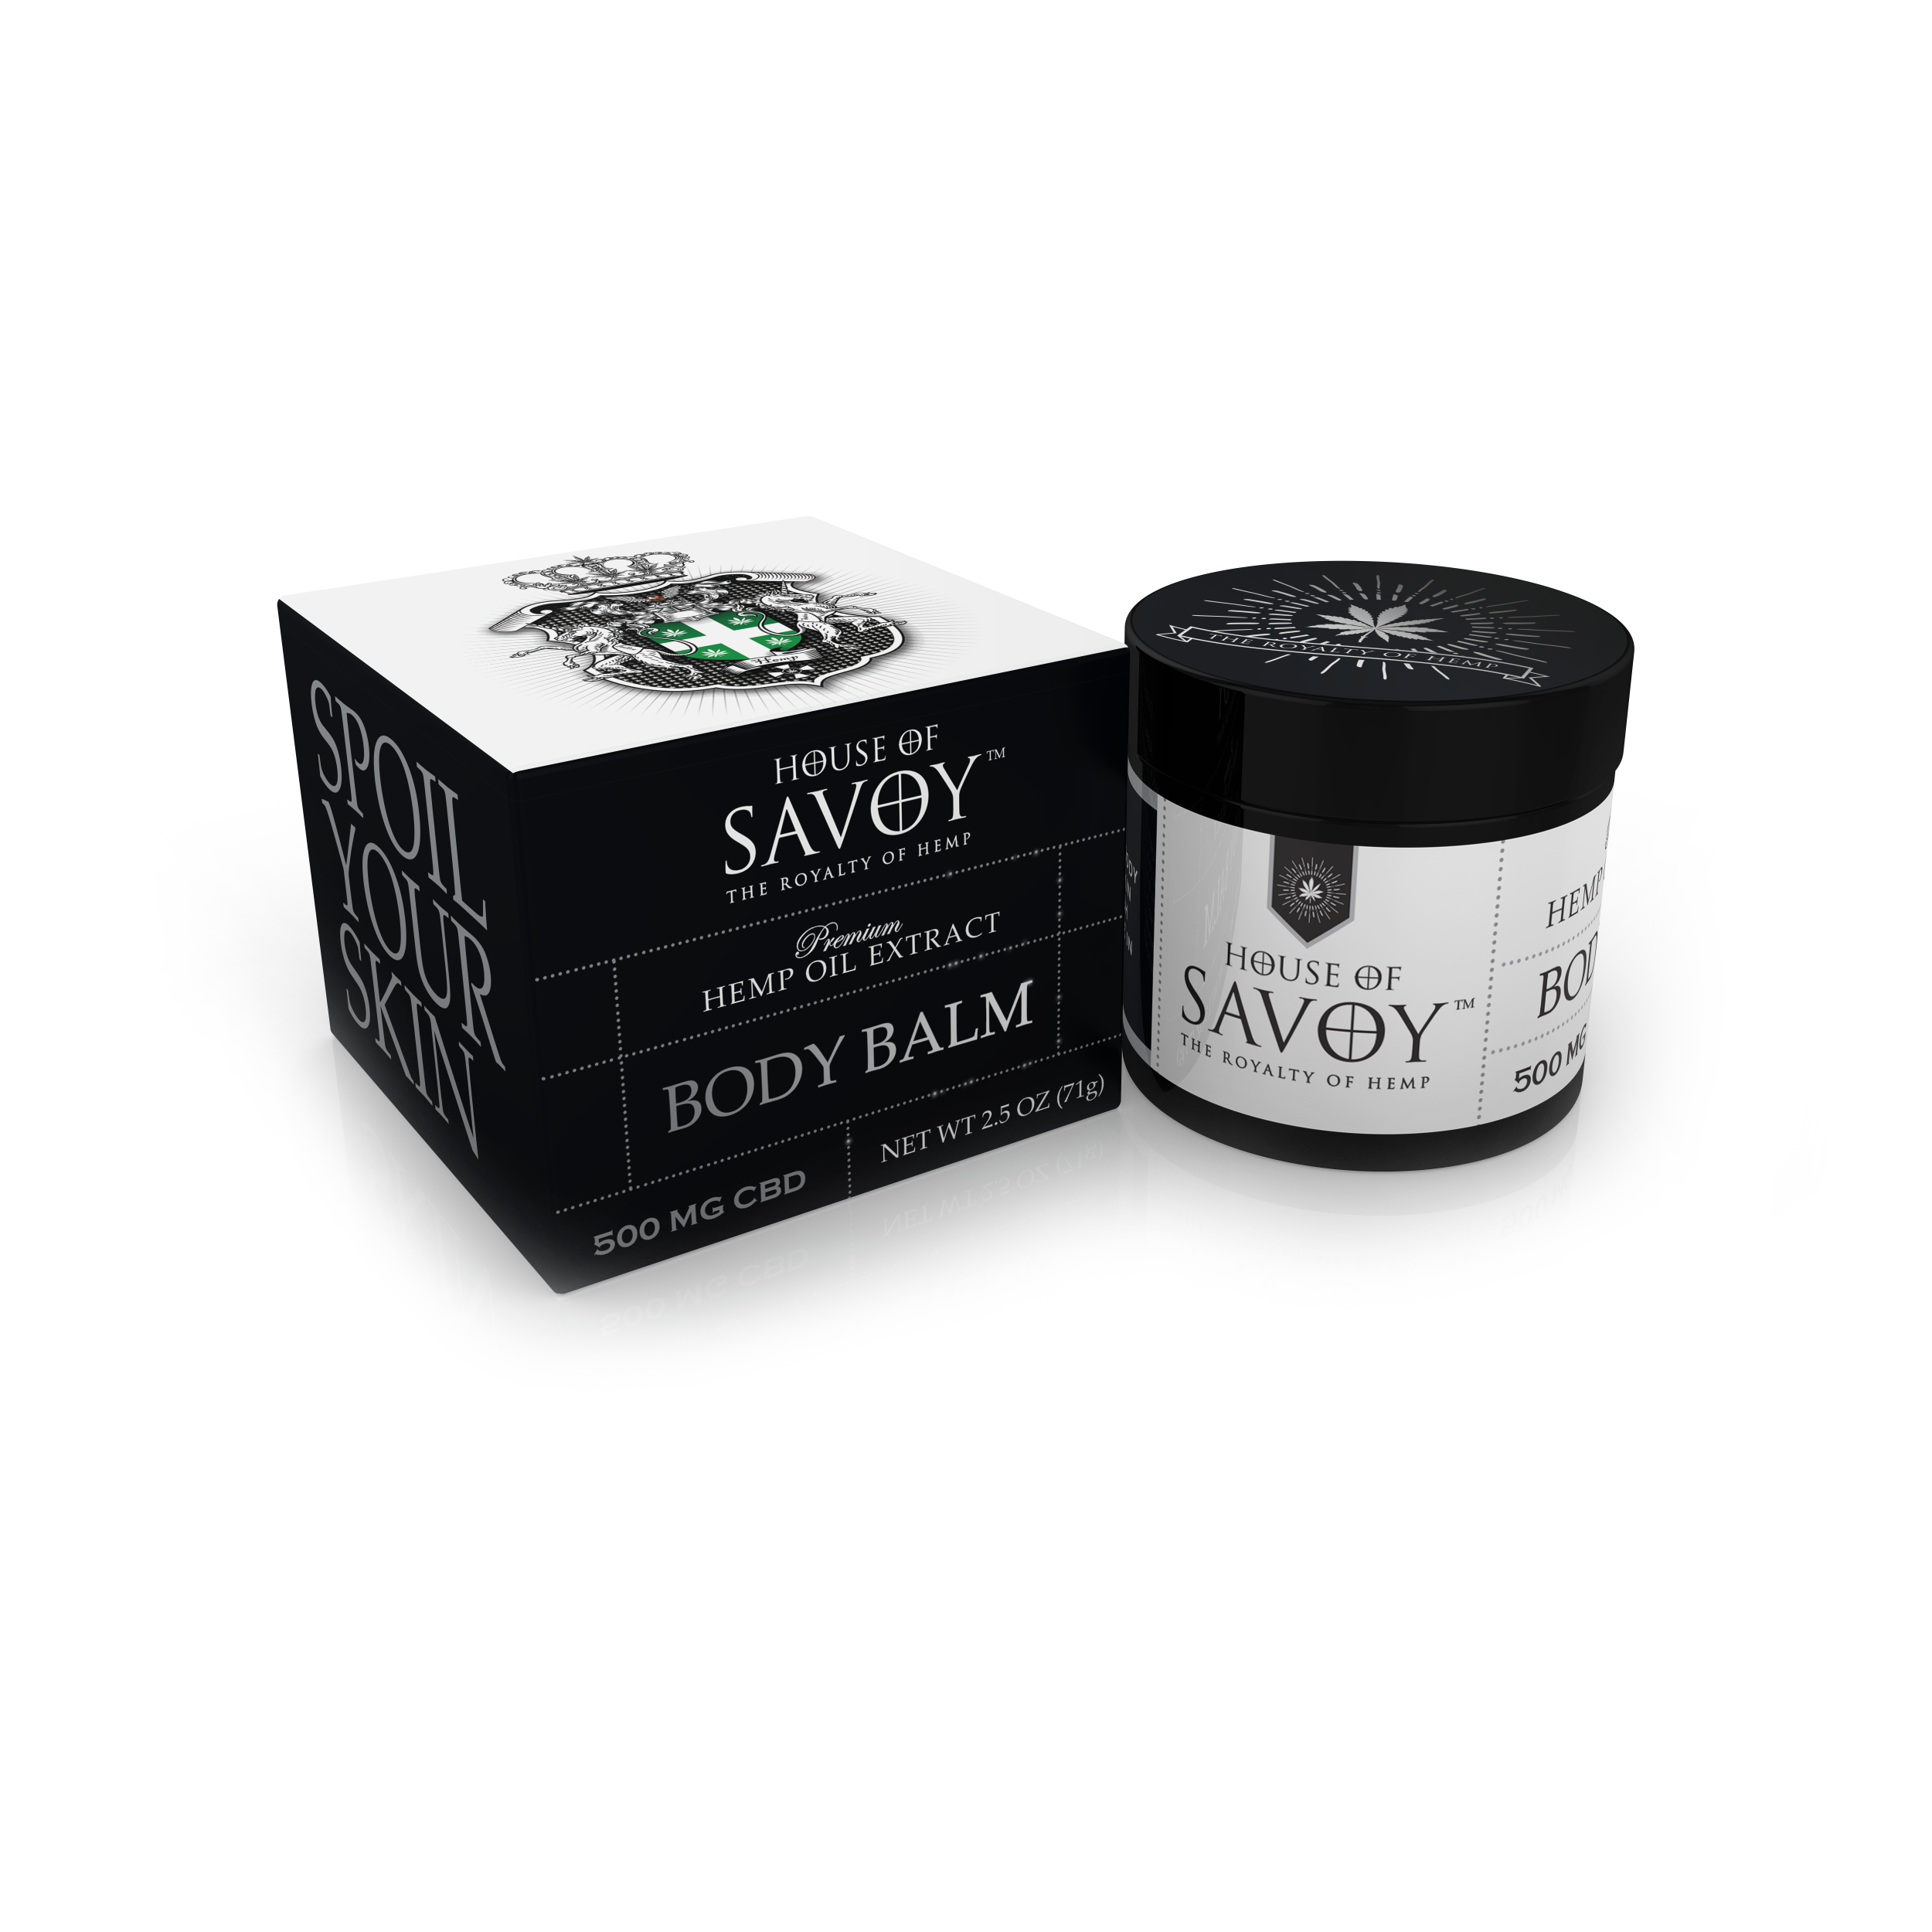 House of Savoy 500 mg CBD Body Balm